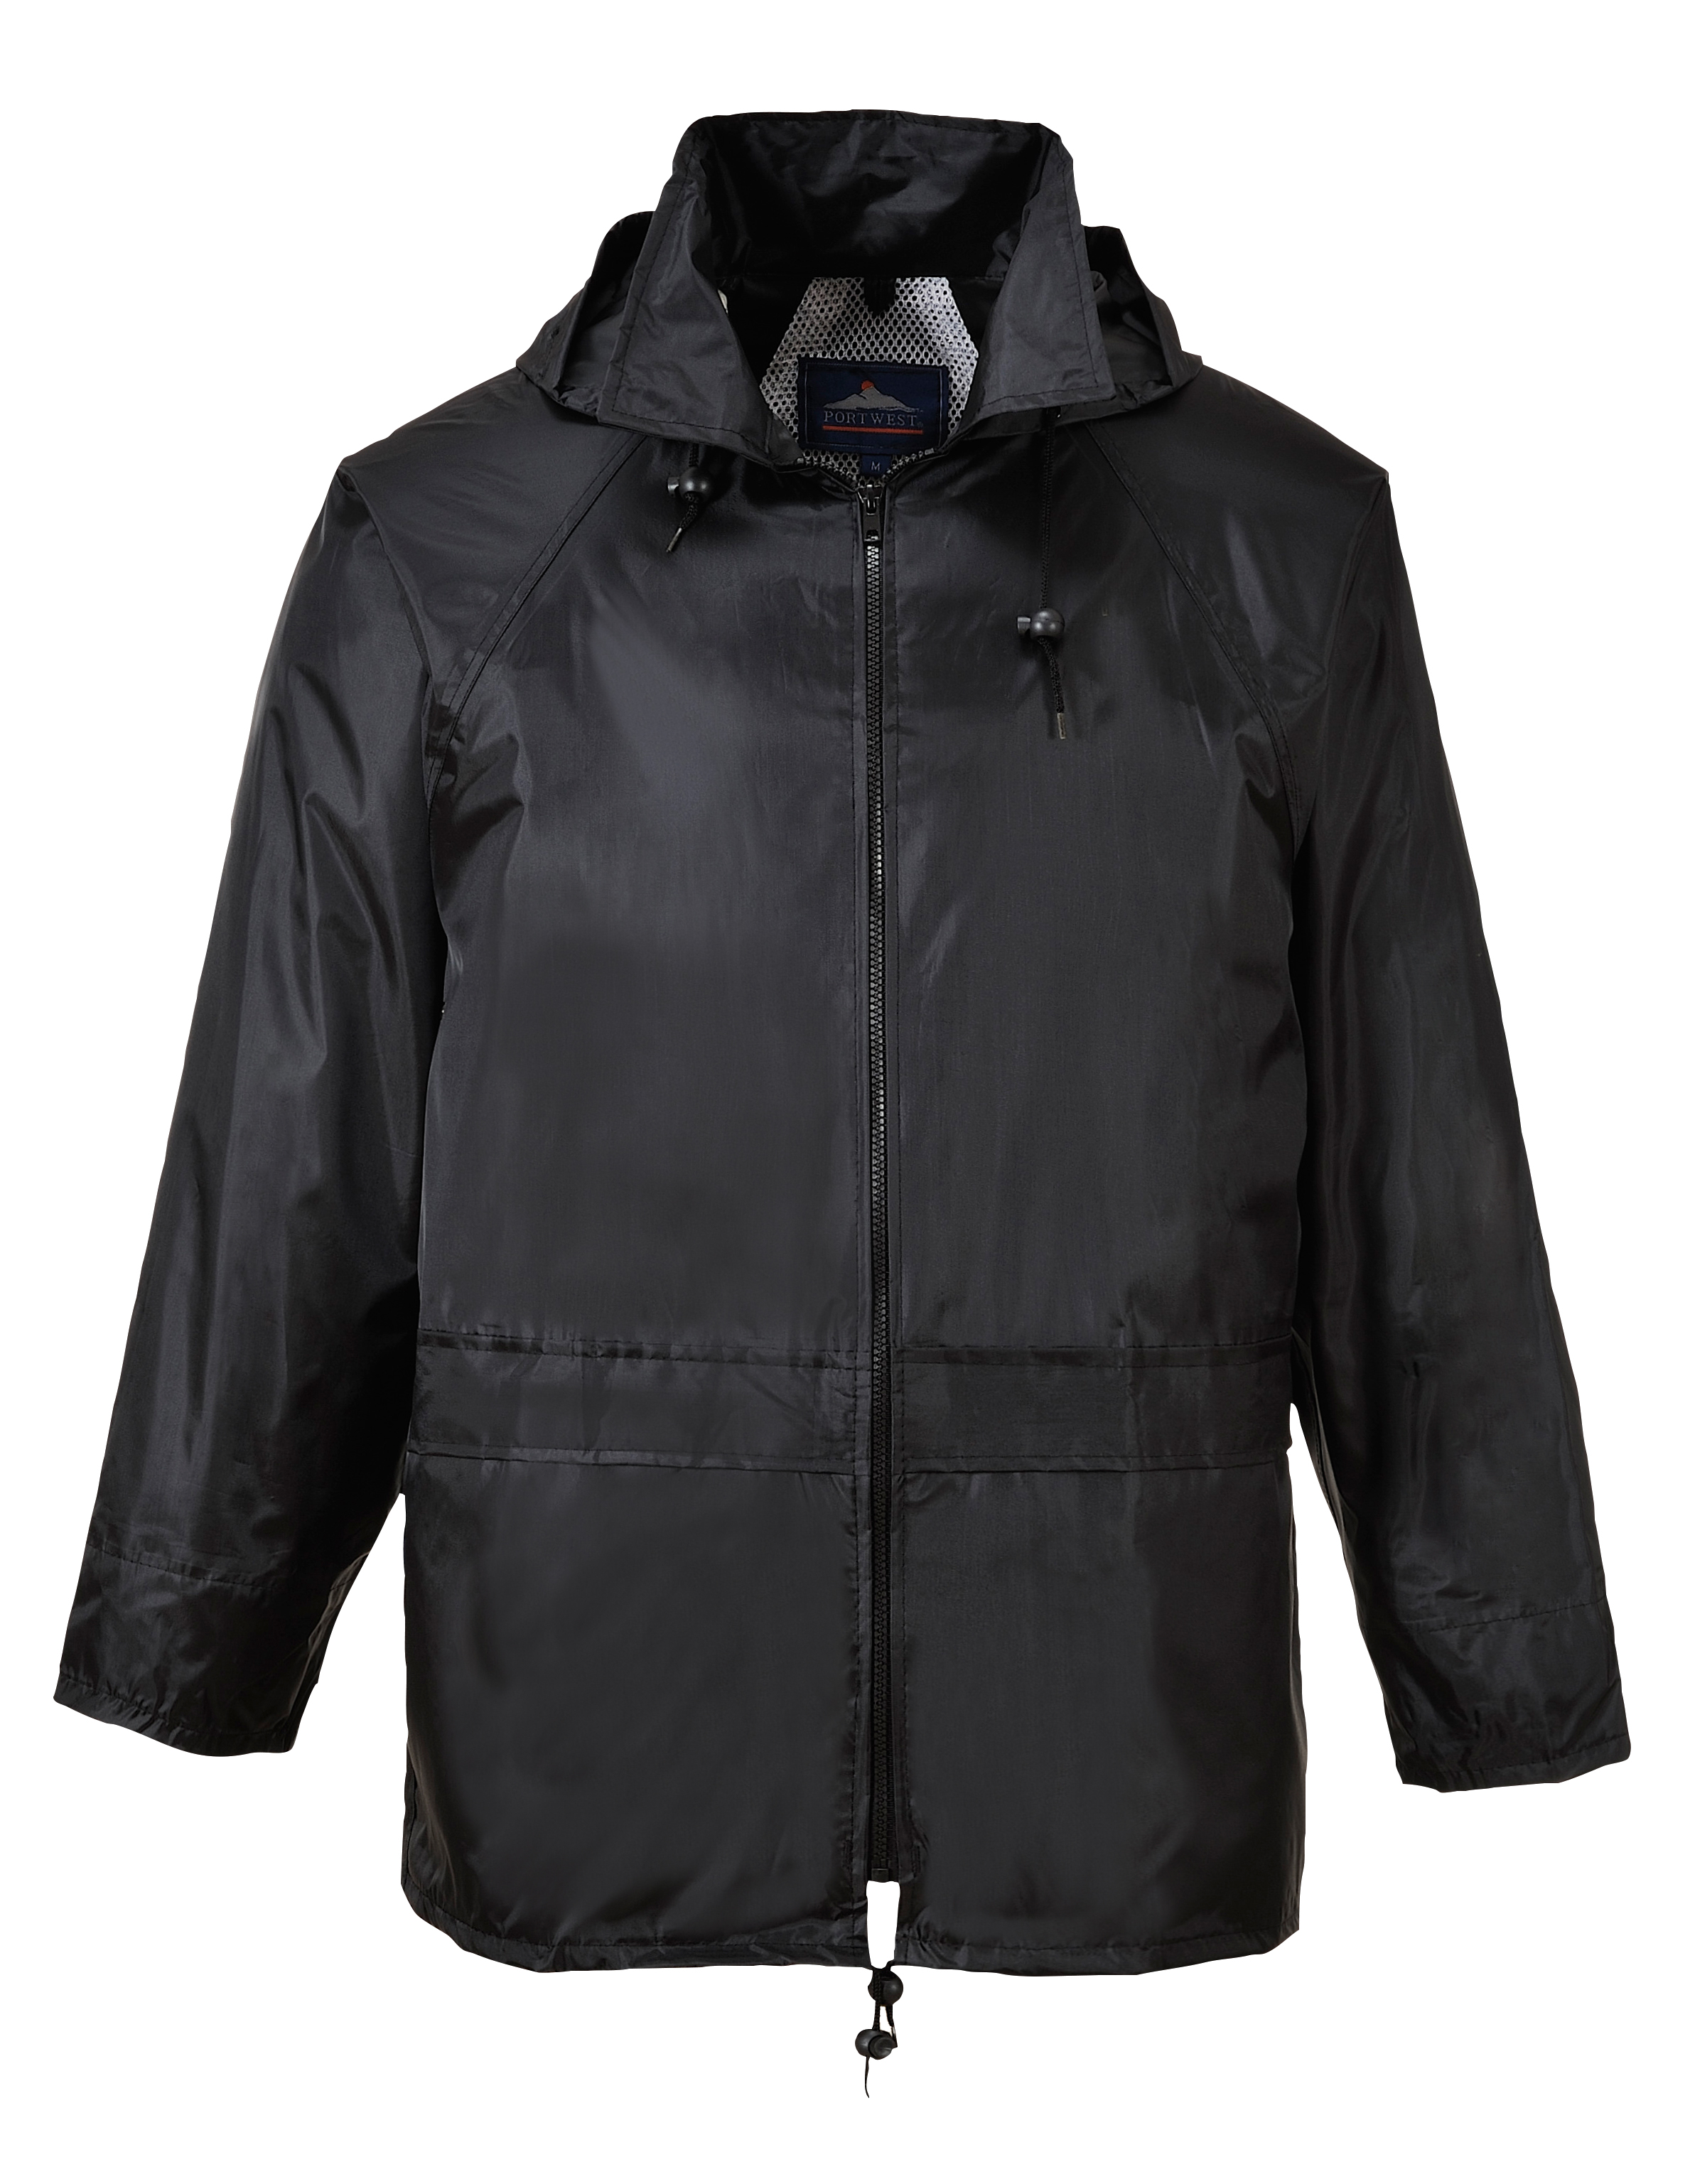 EAN 5036108234615 product image for PORTWEST Men's Rain Jacket, Size: XL, Black | upcitemdb.com